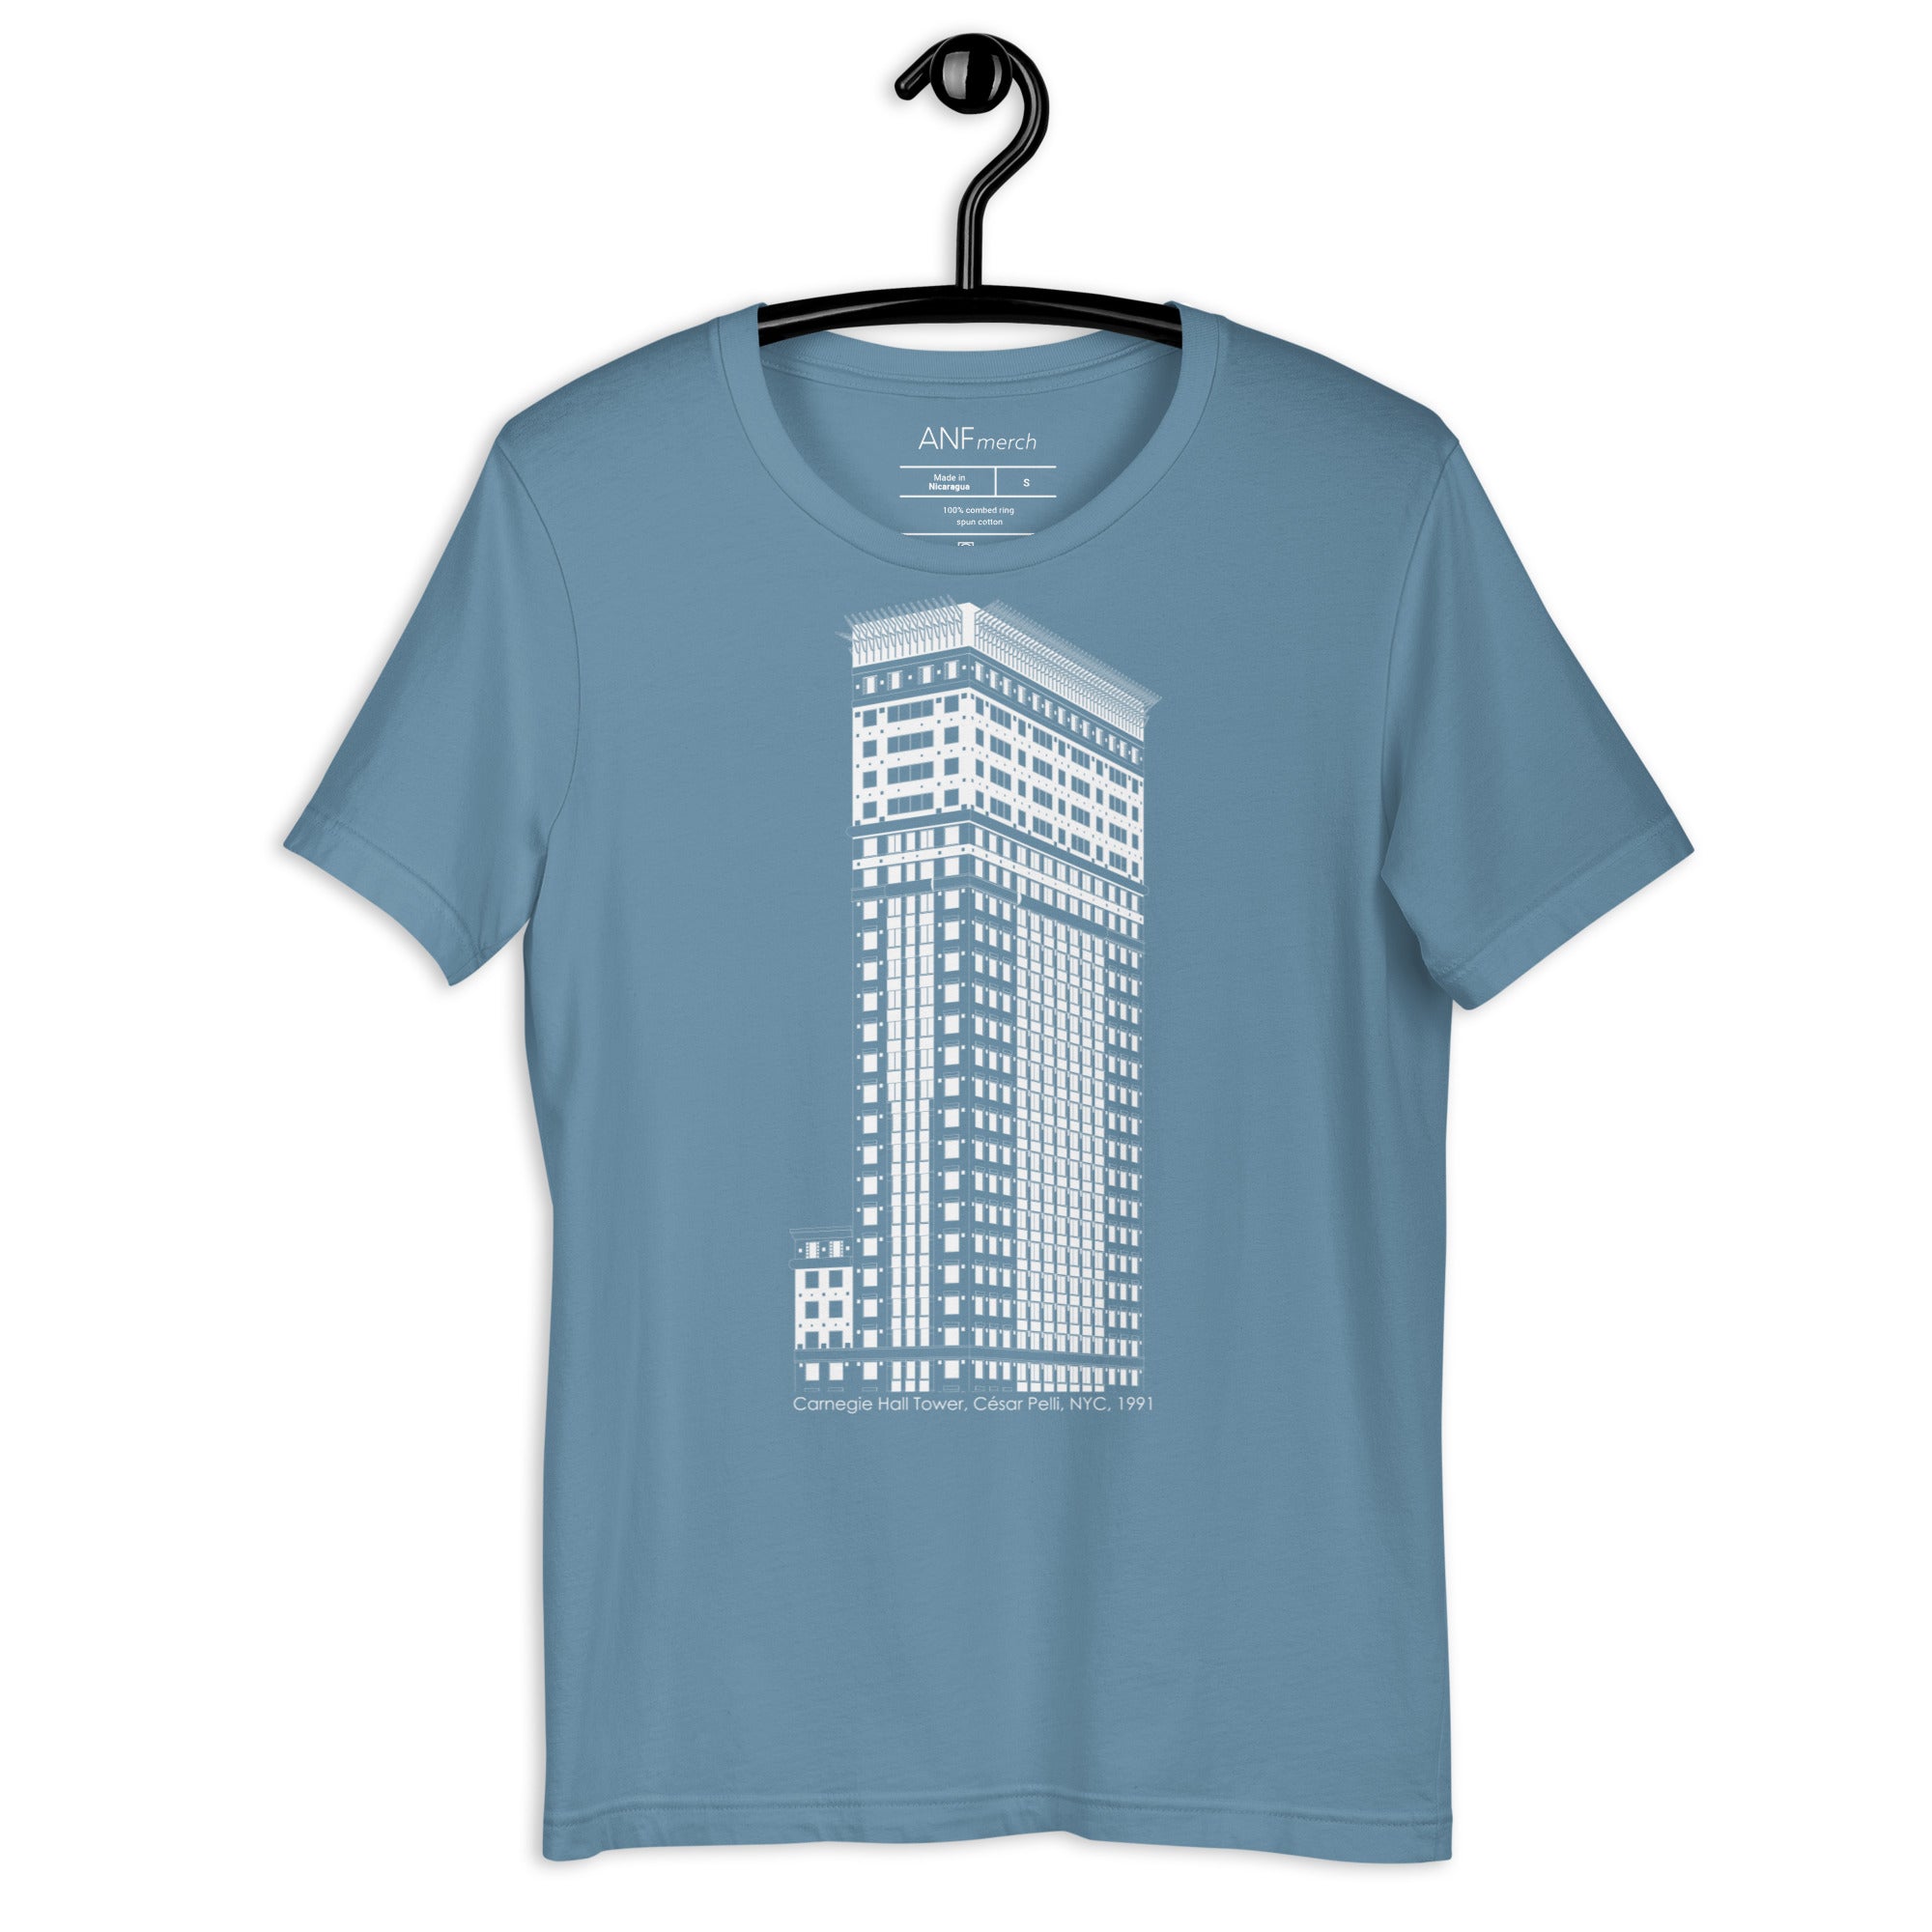 Carnegie Hall Tower Unisex T-Shirt